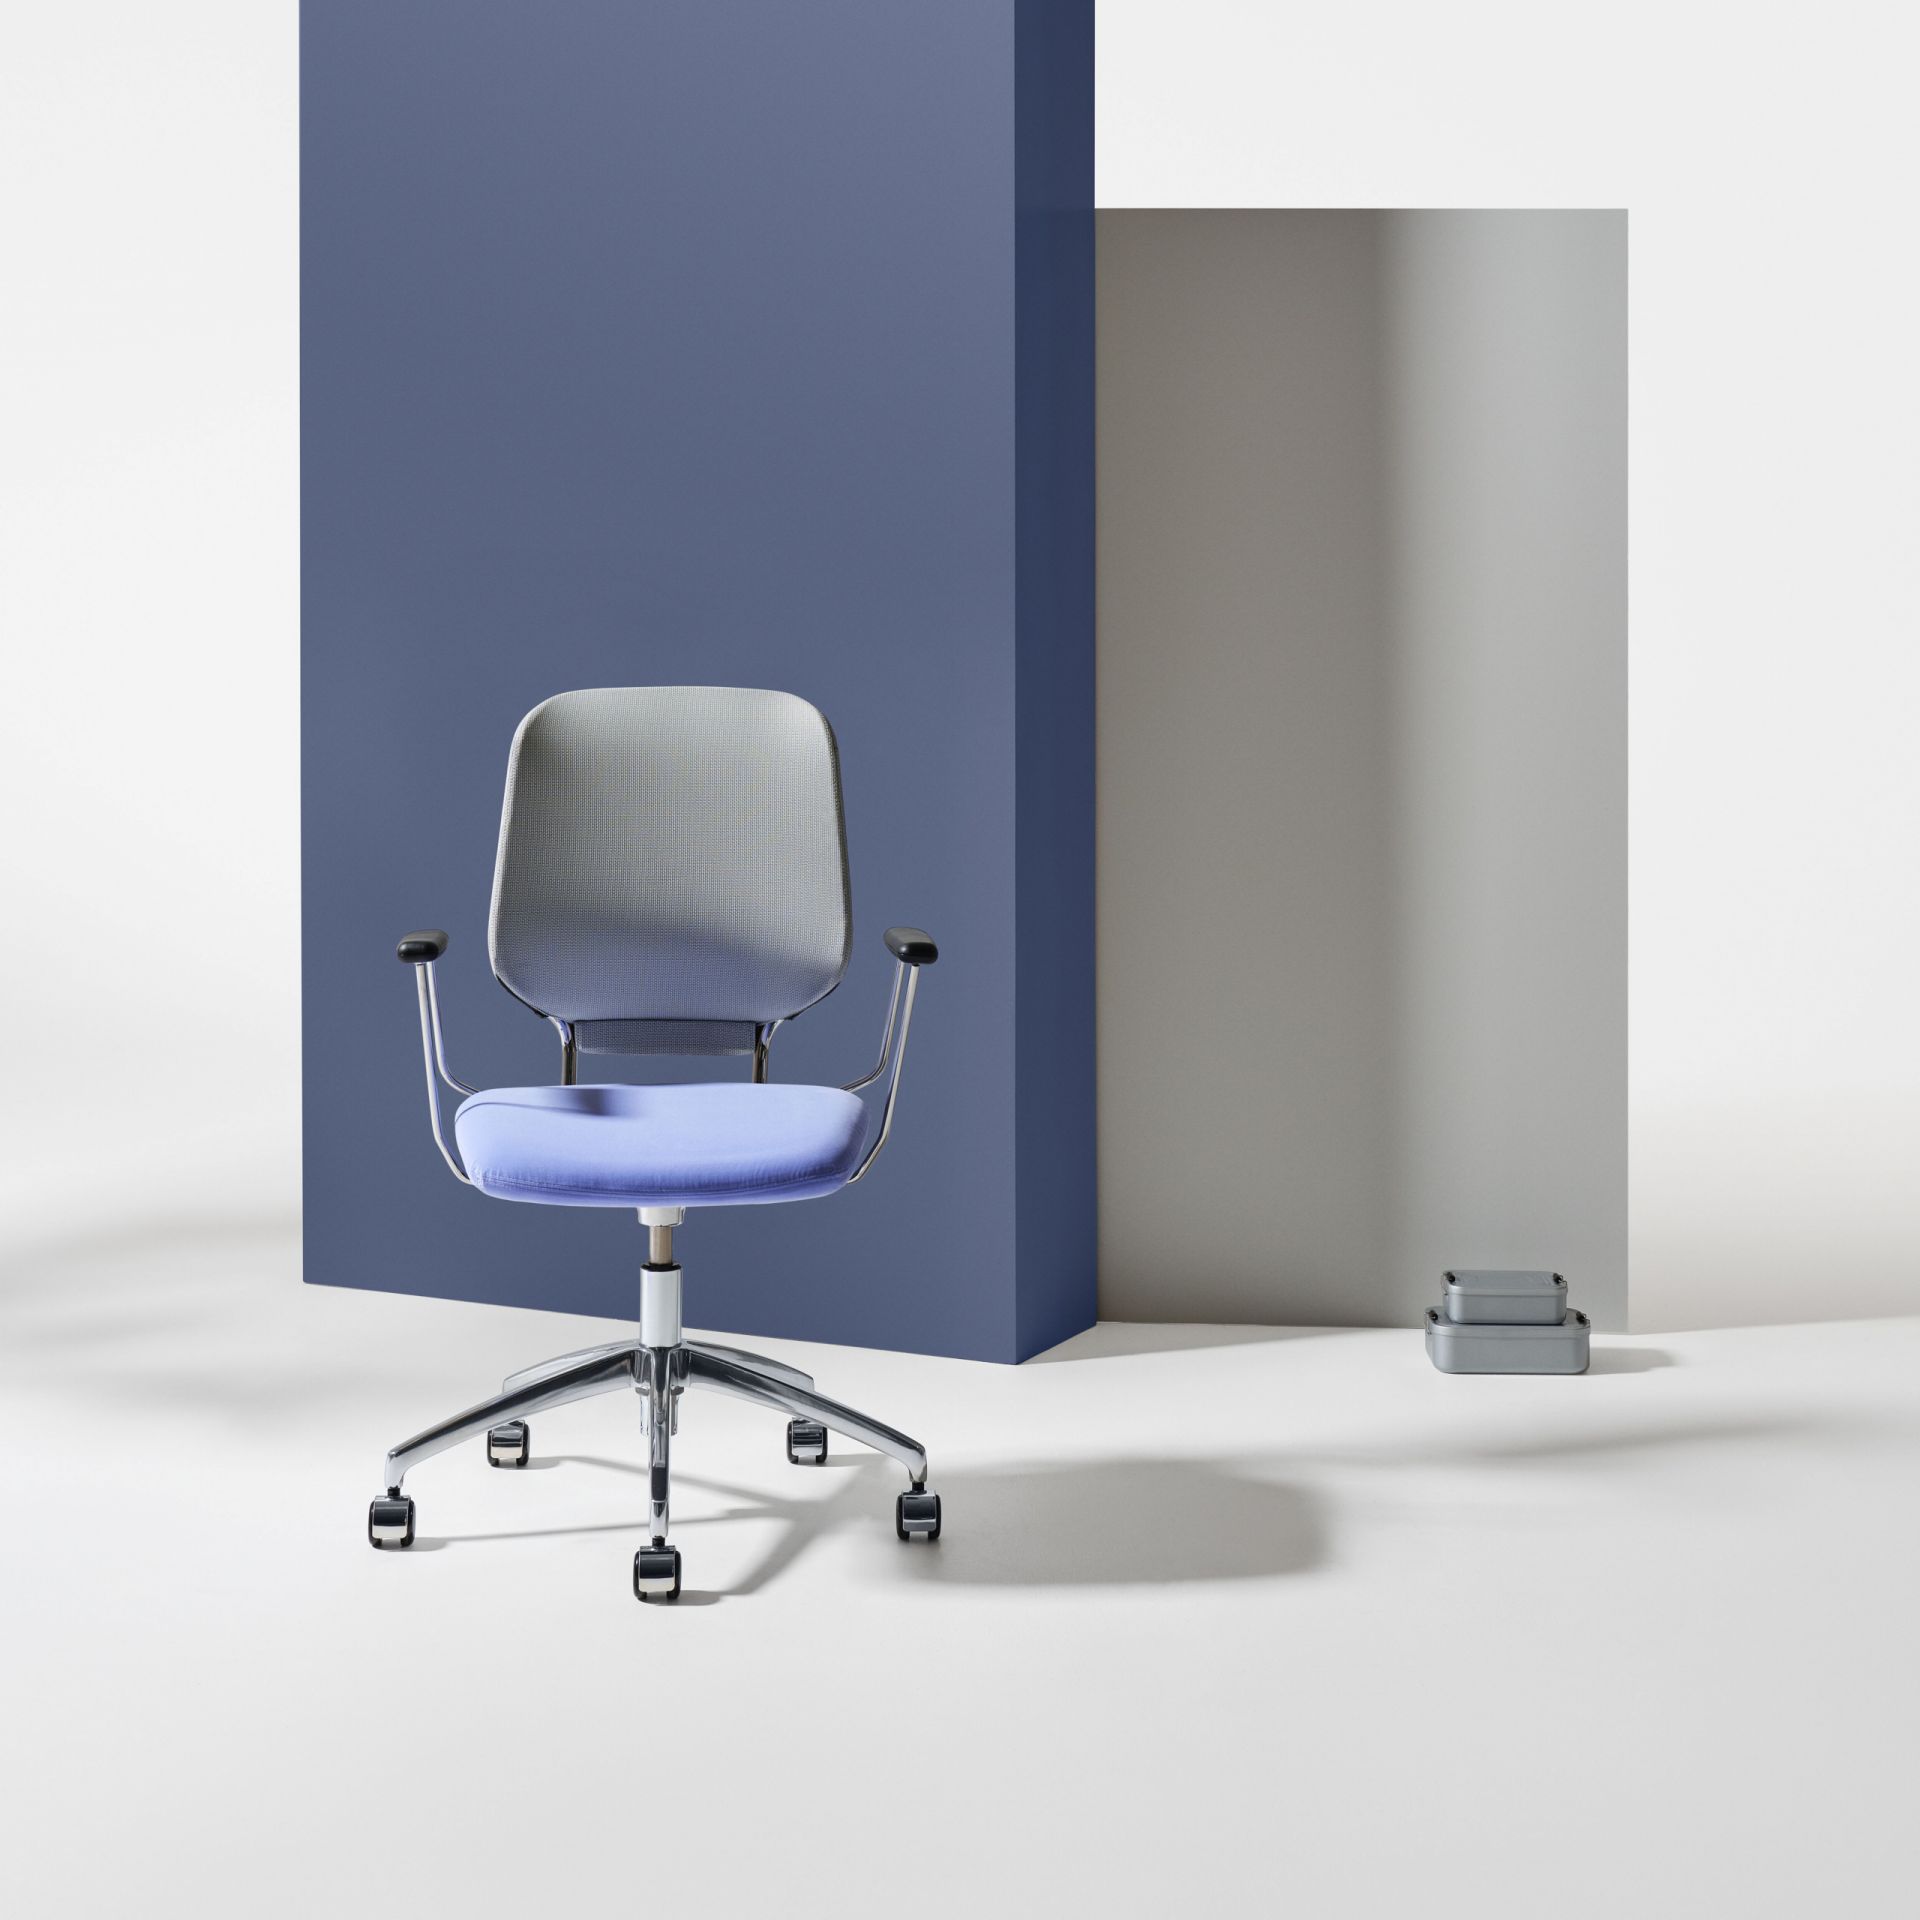 Savo Invite Invite meeting chair product image 3